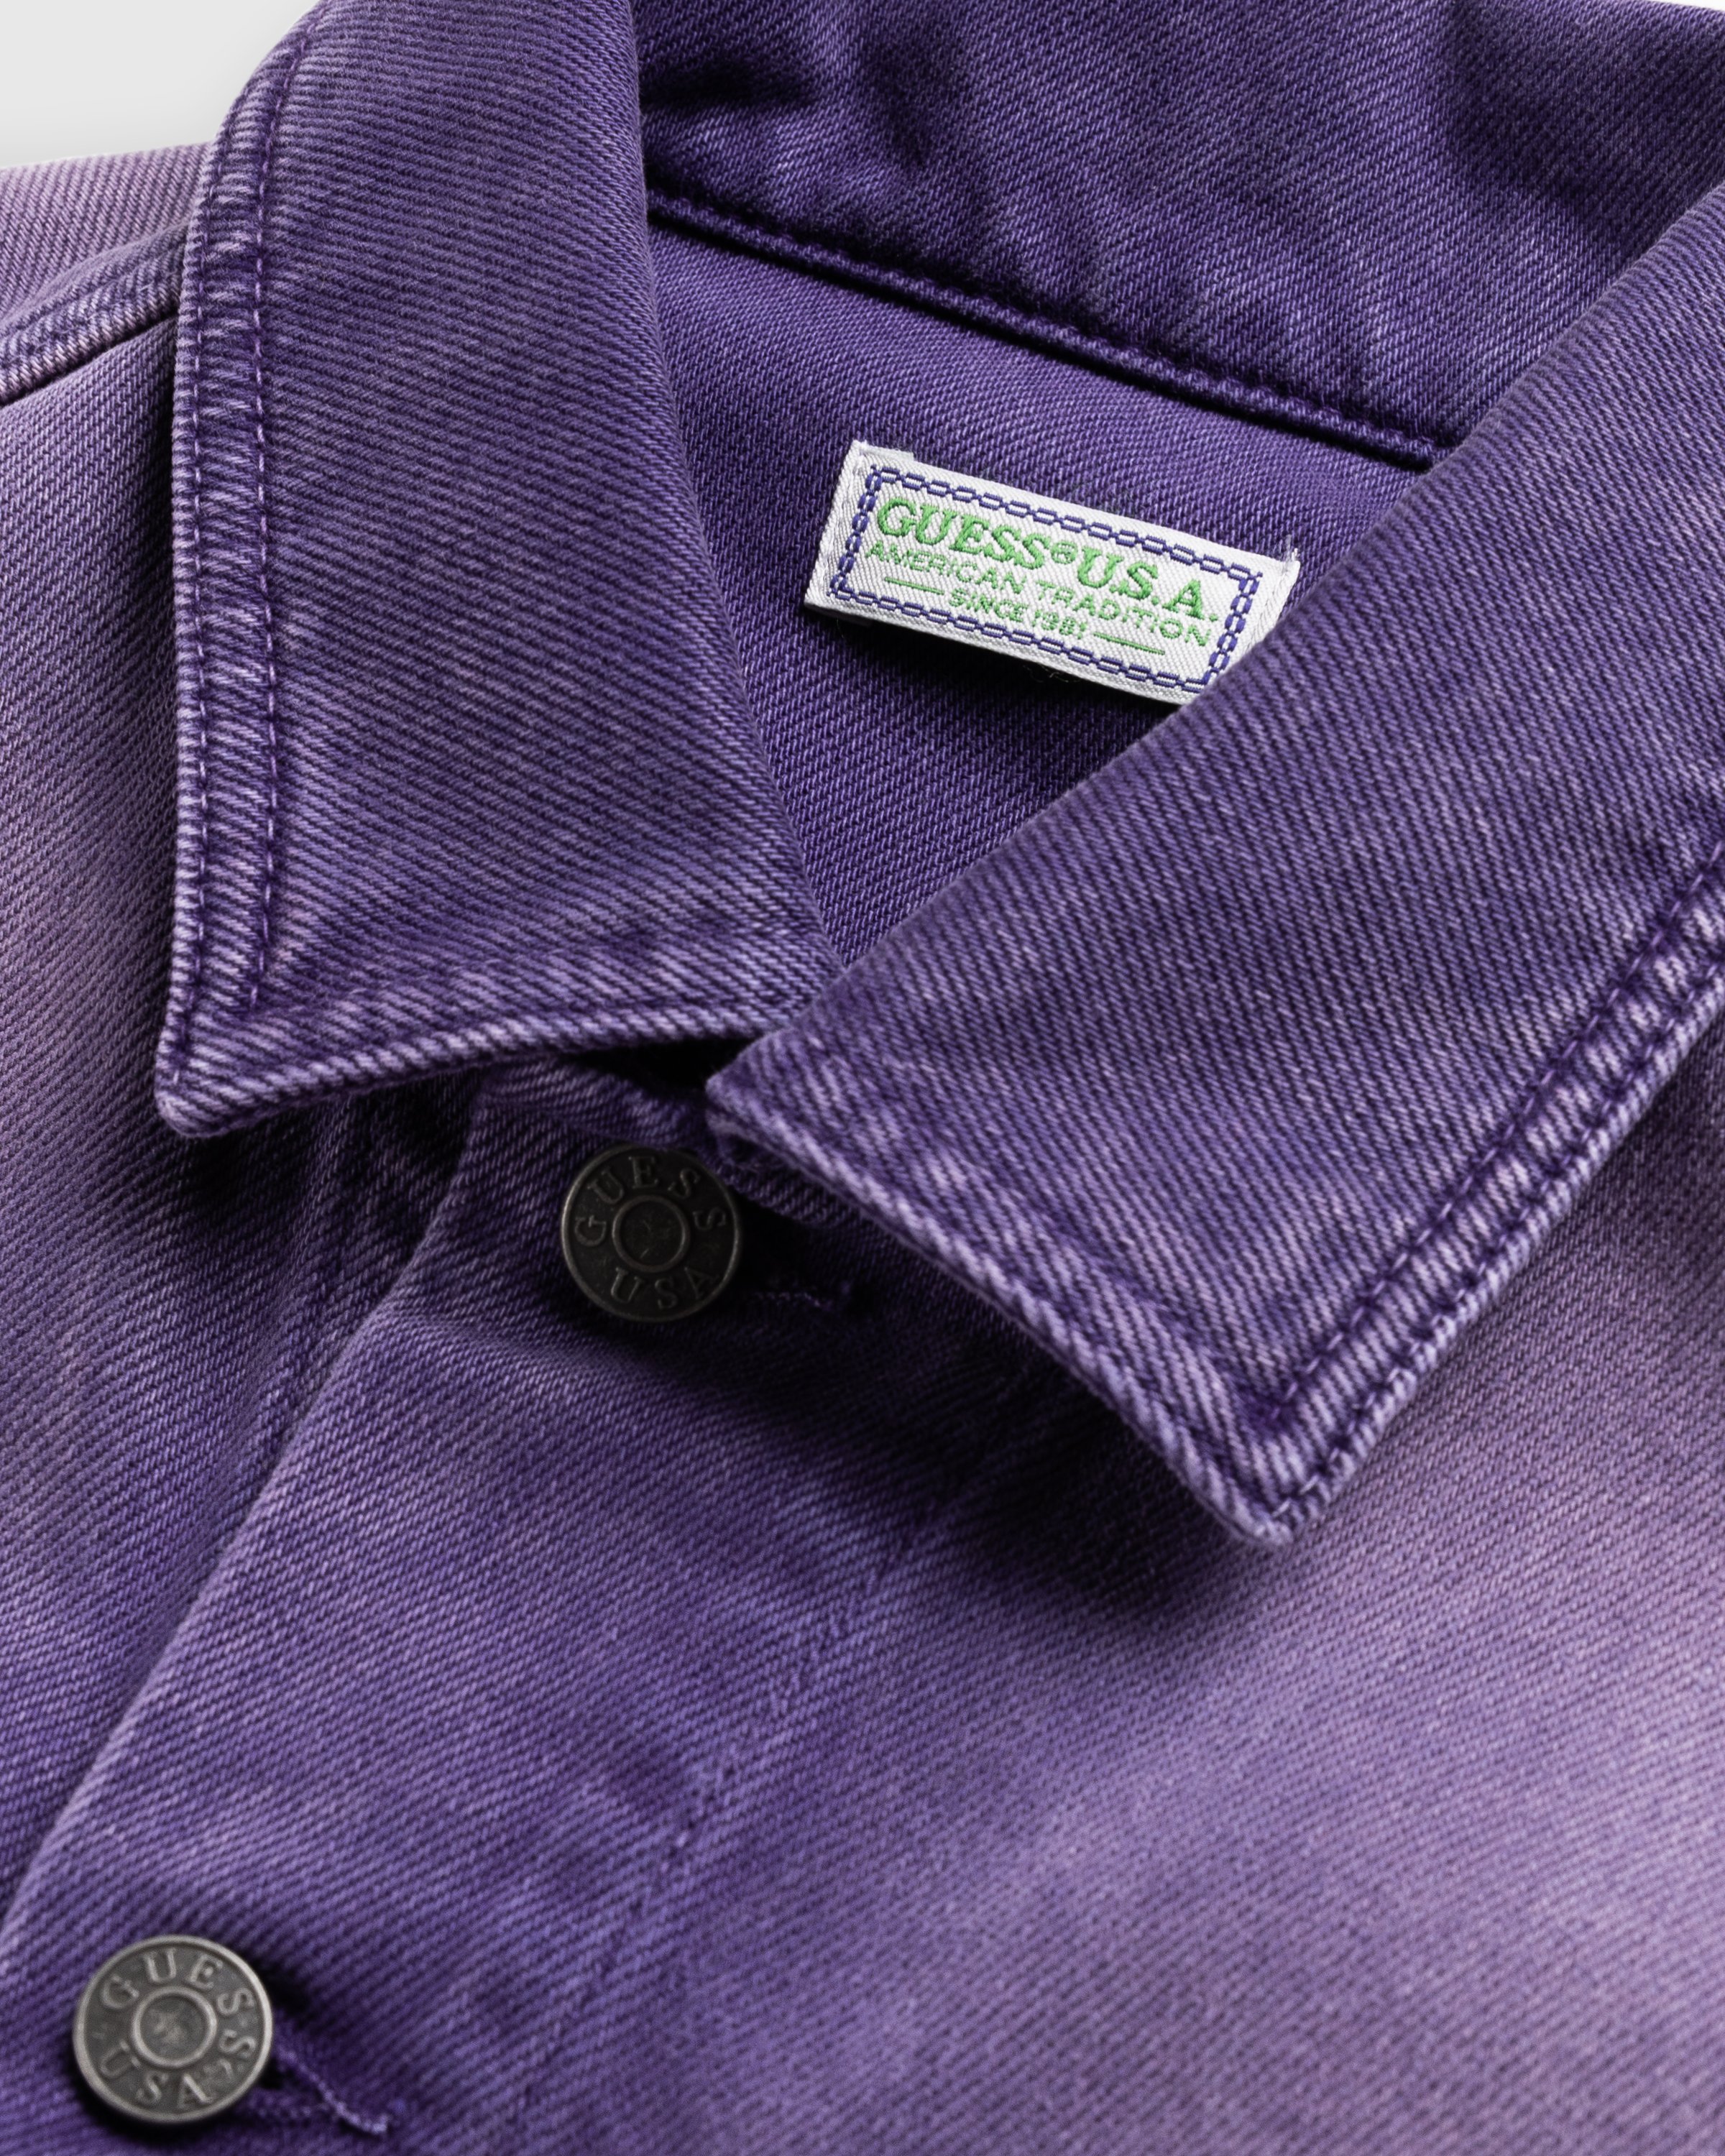 Guess USA - Vintage Denim Jacket Purple - Clothing - Purple - Image 5